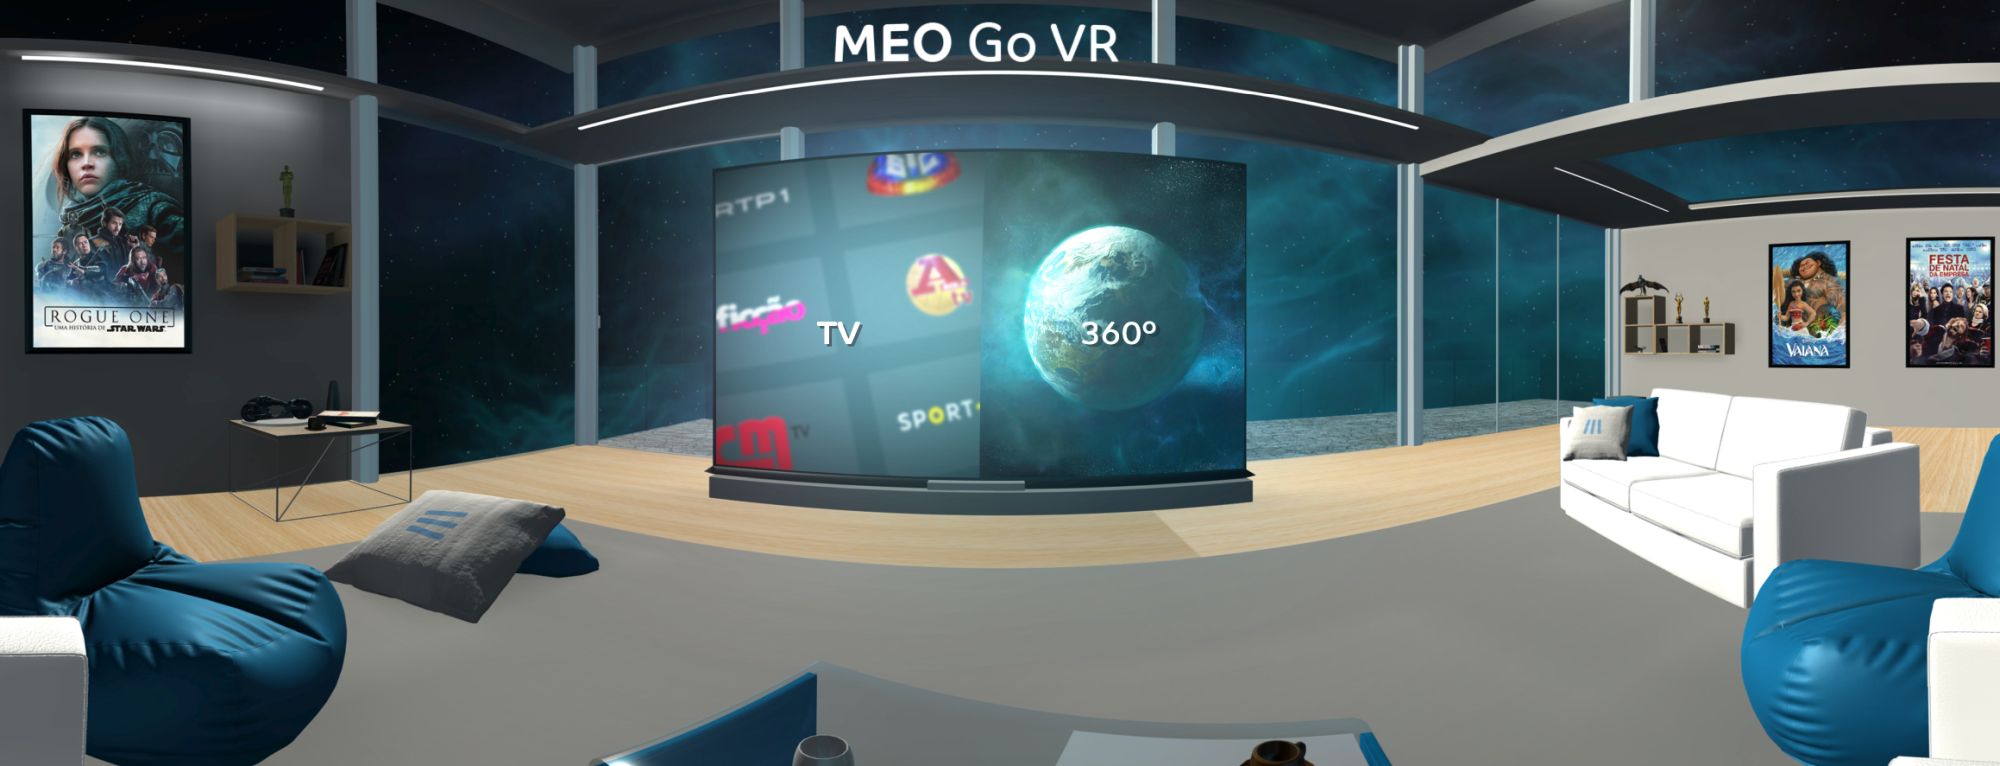 MEO Go VR Realidade Virtual